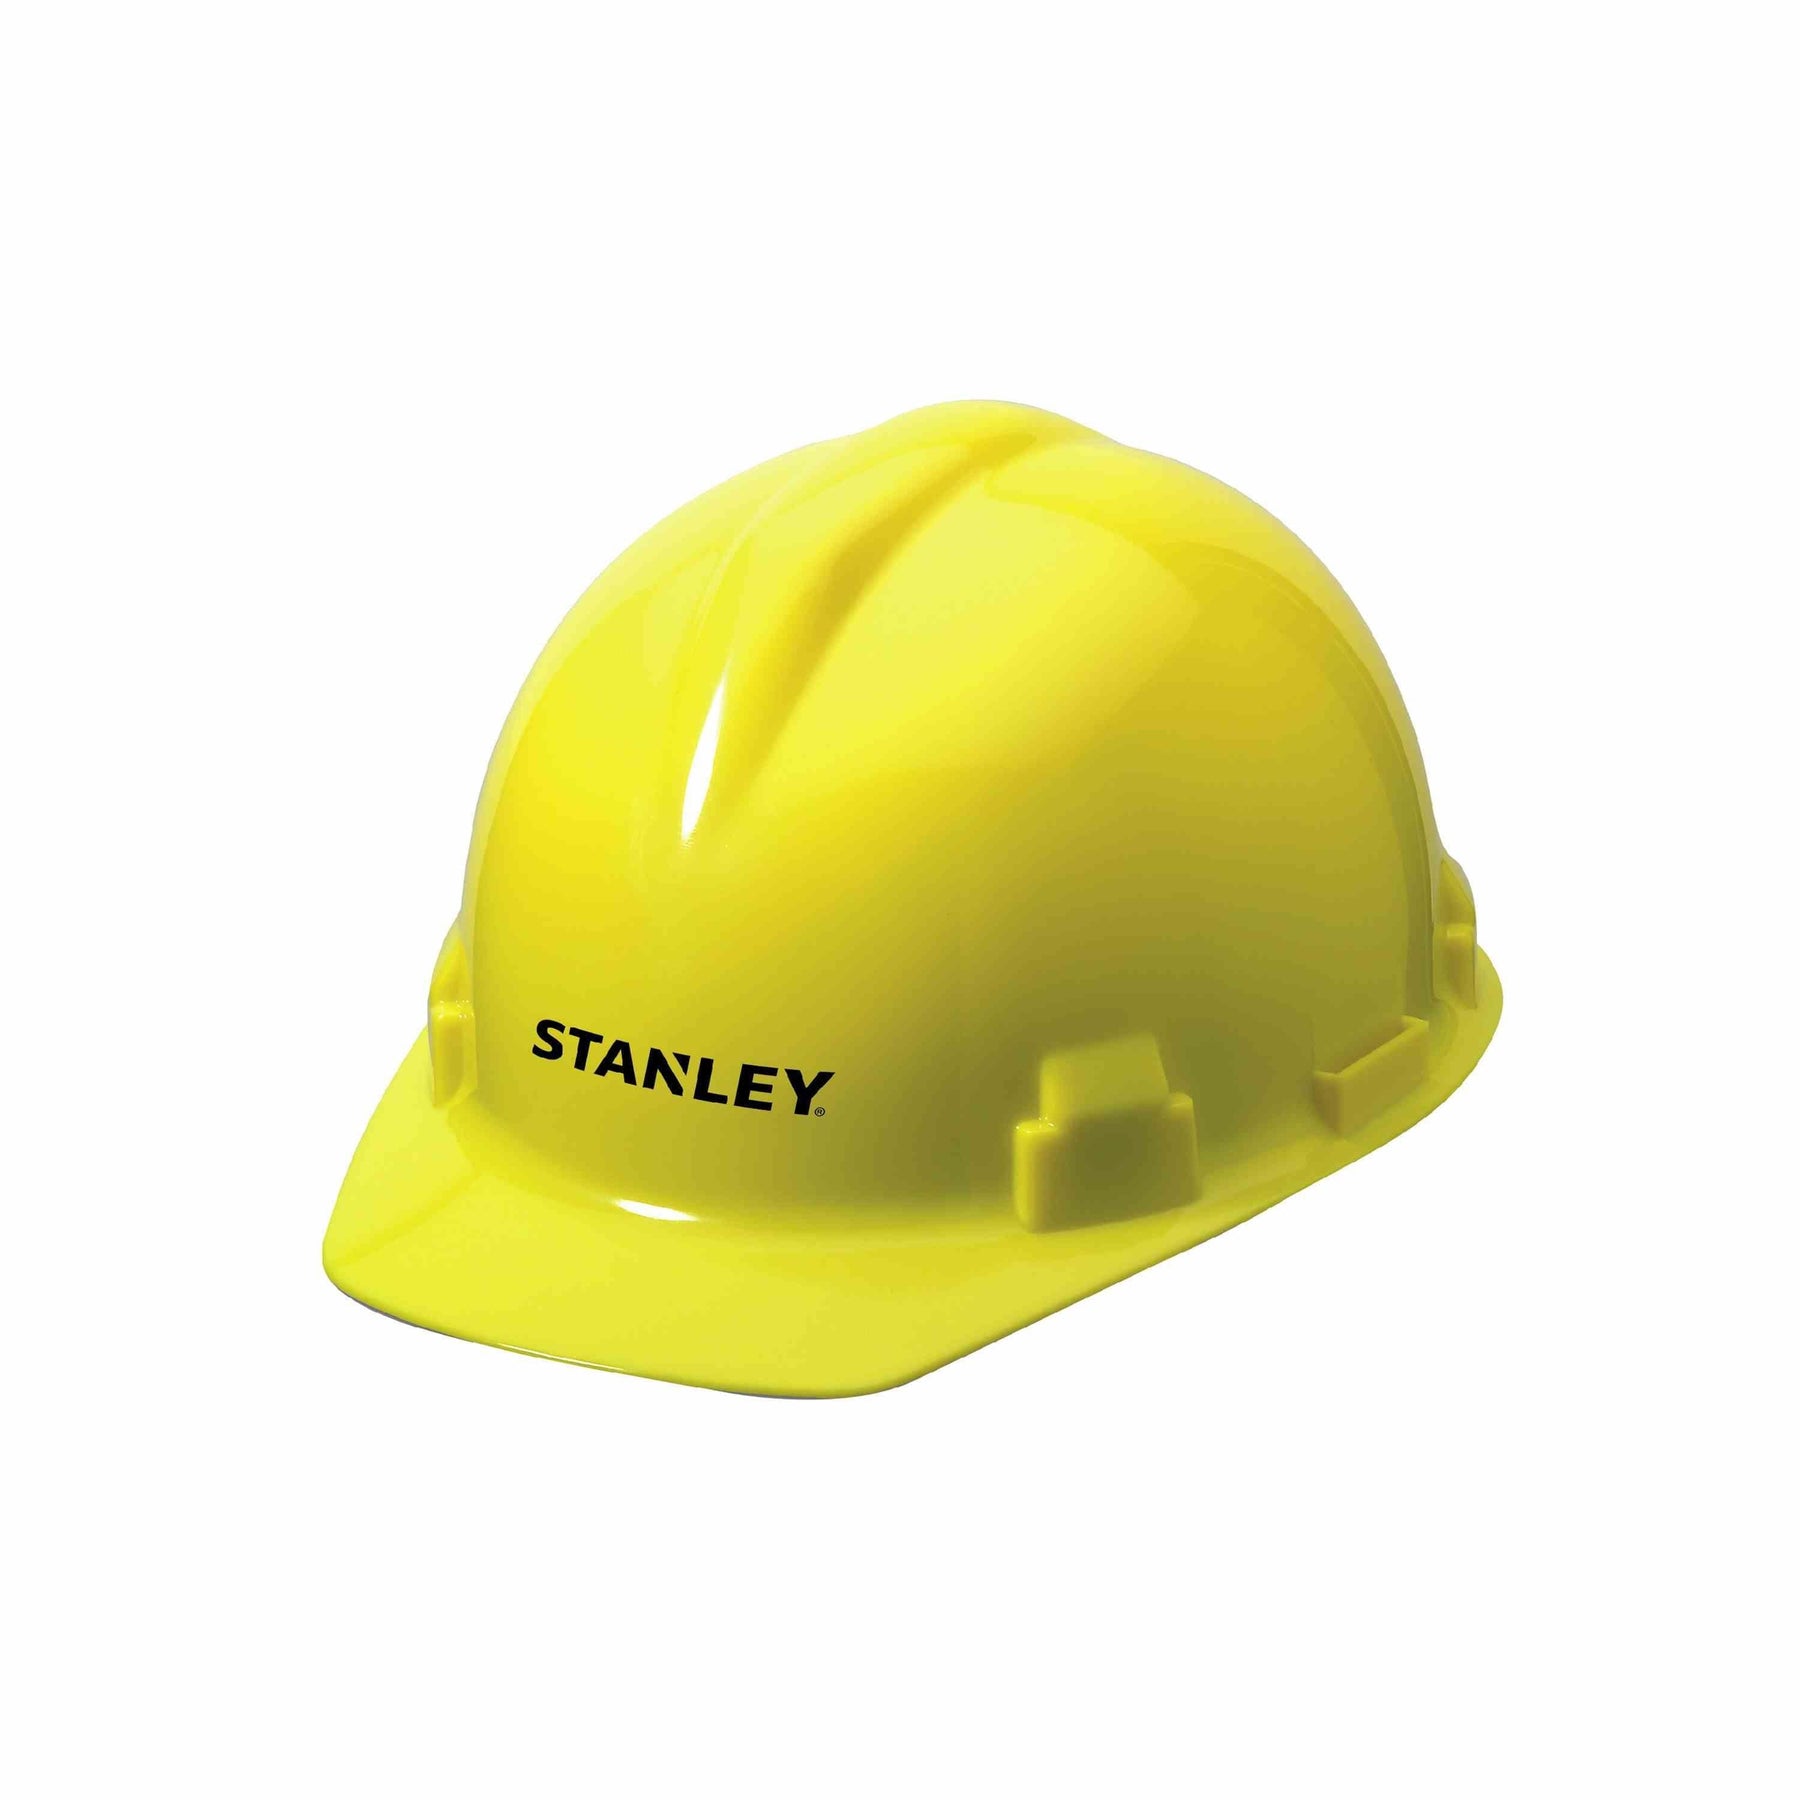 Stanley Jr. Hard Helmet | Real Tools for Kids